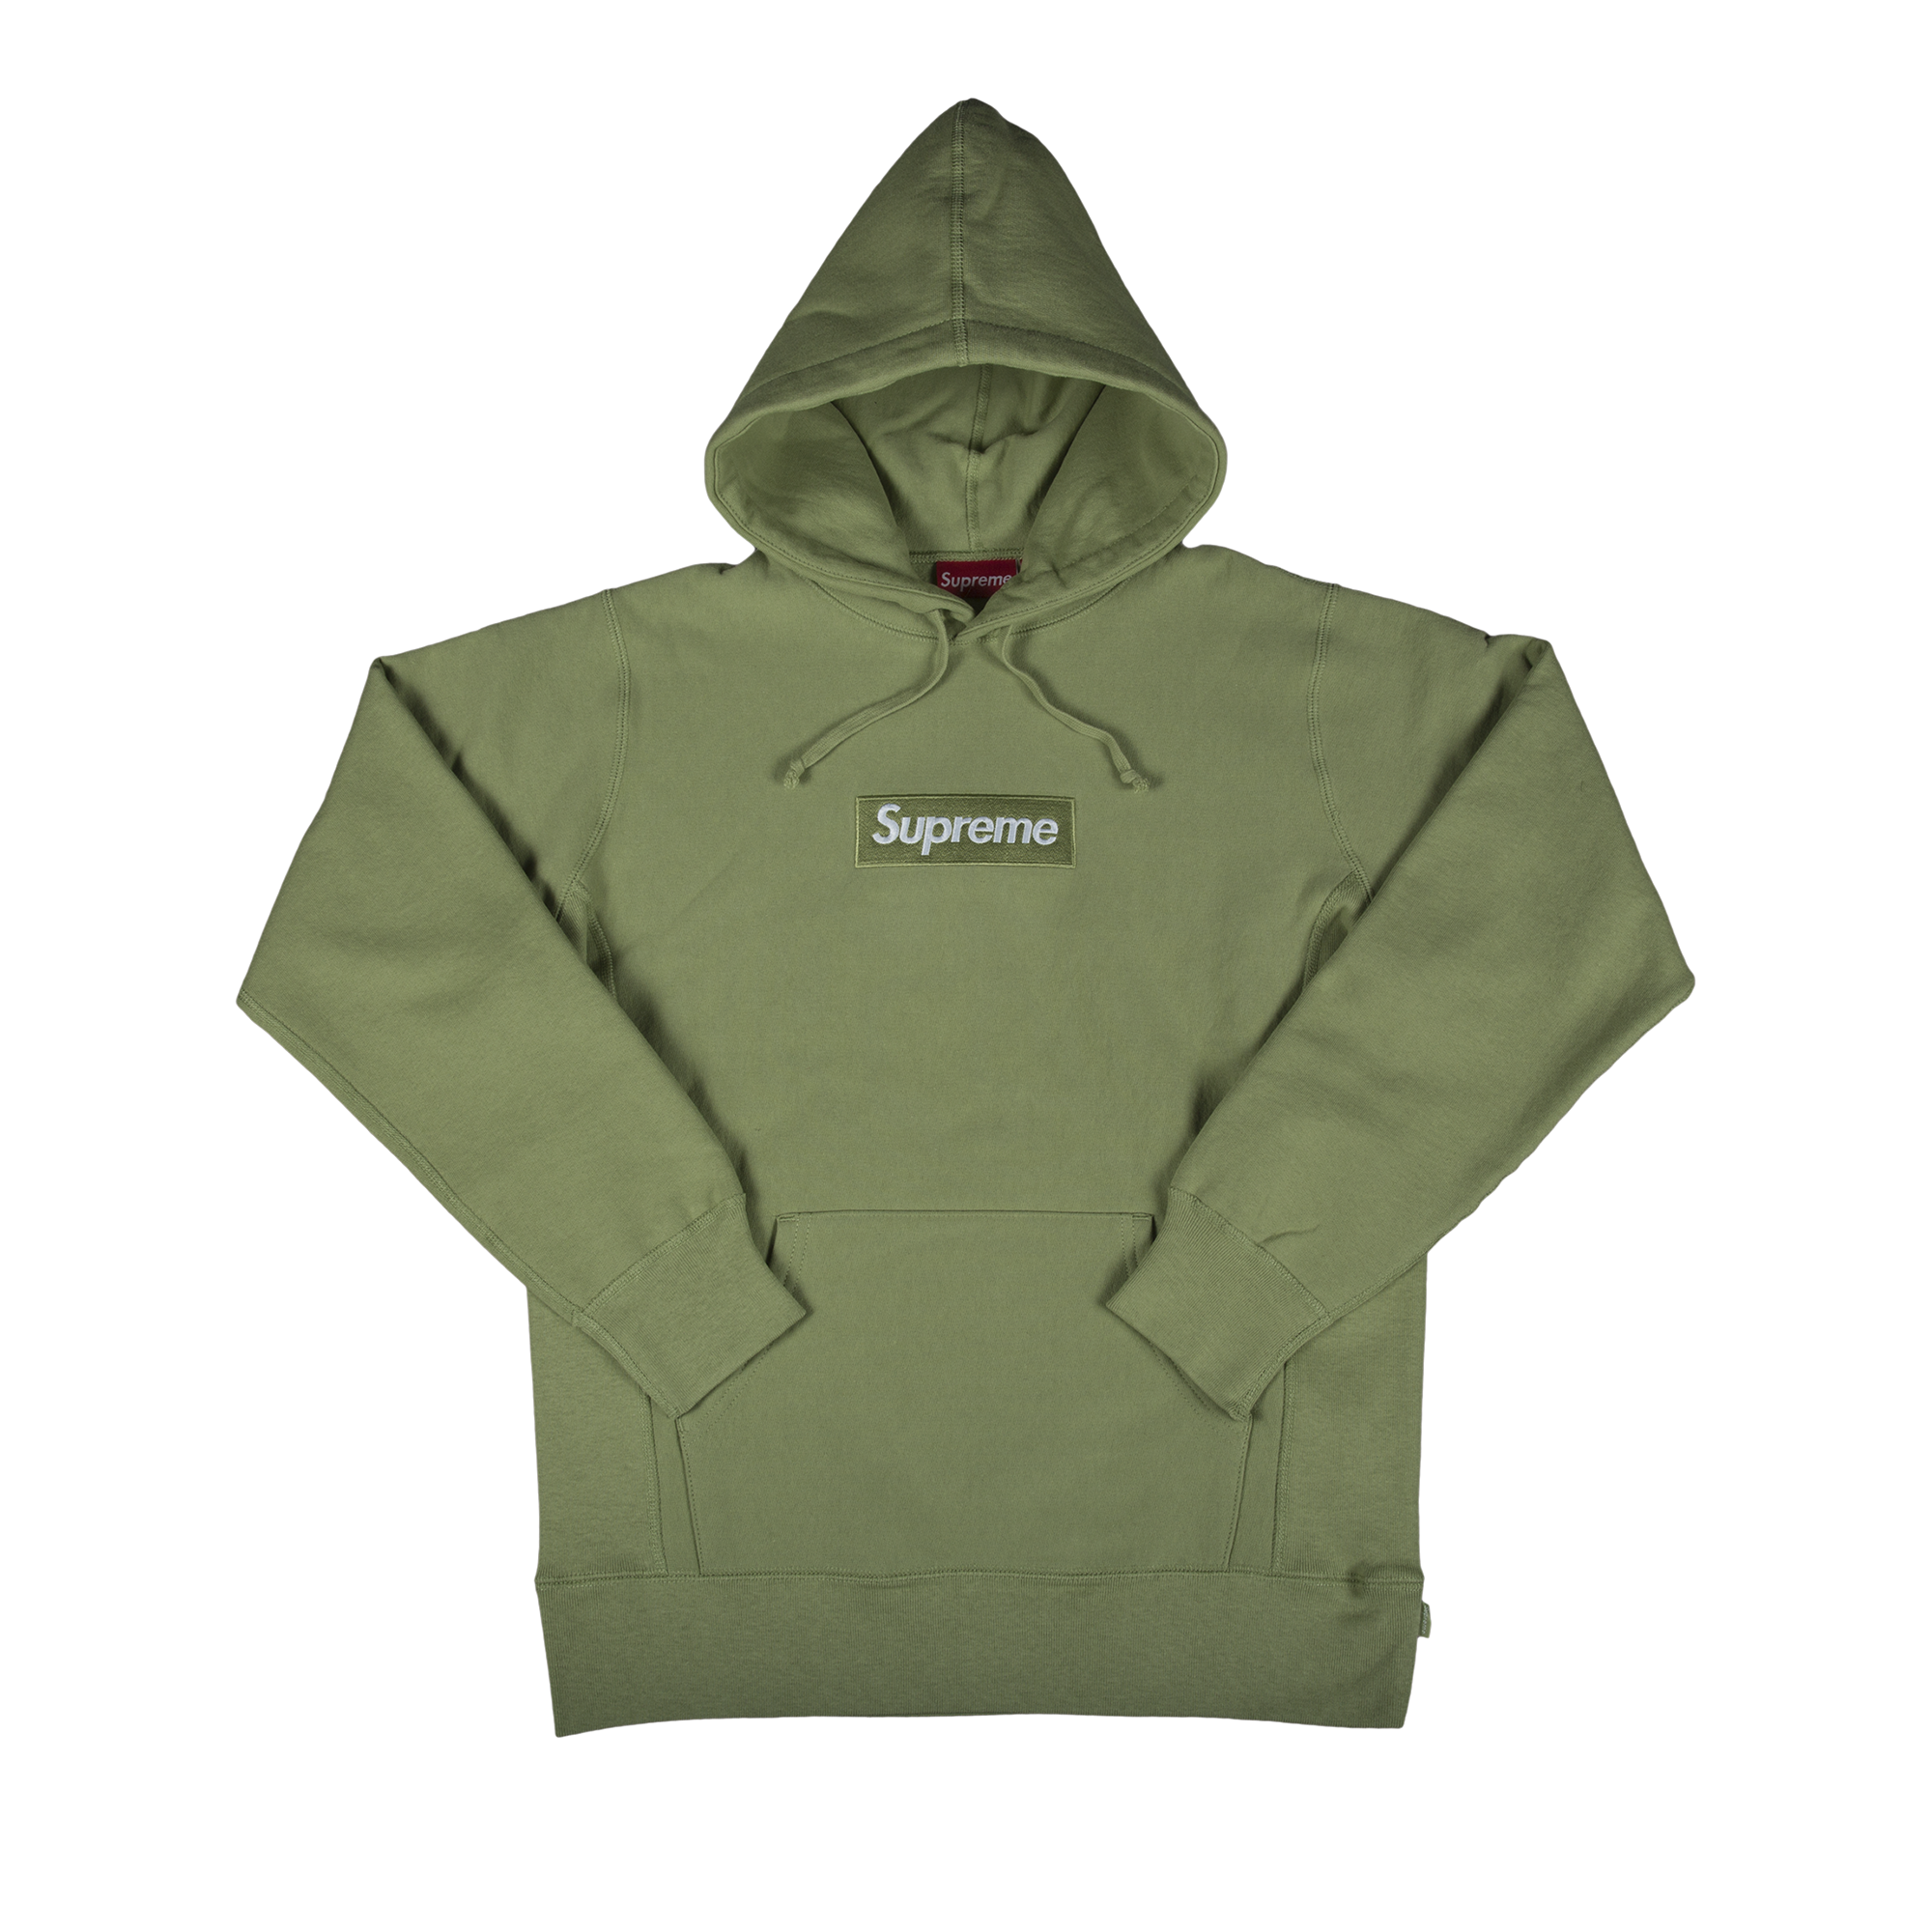 Buy Supreme Box Logo Hooded Sweatshirt 'Sage'   FWSW6 SAGE   GOAT